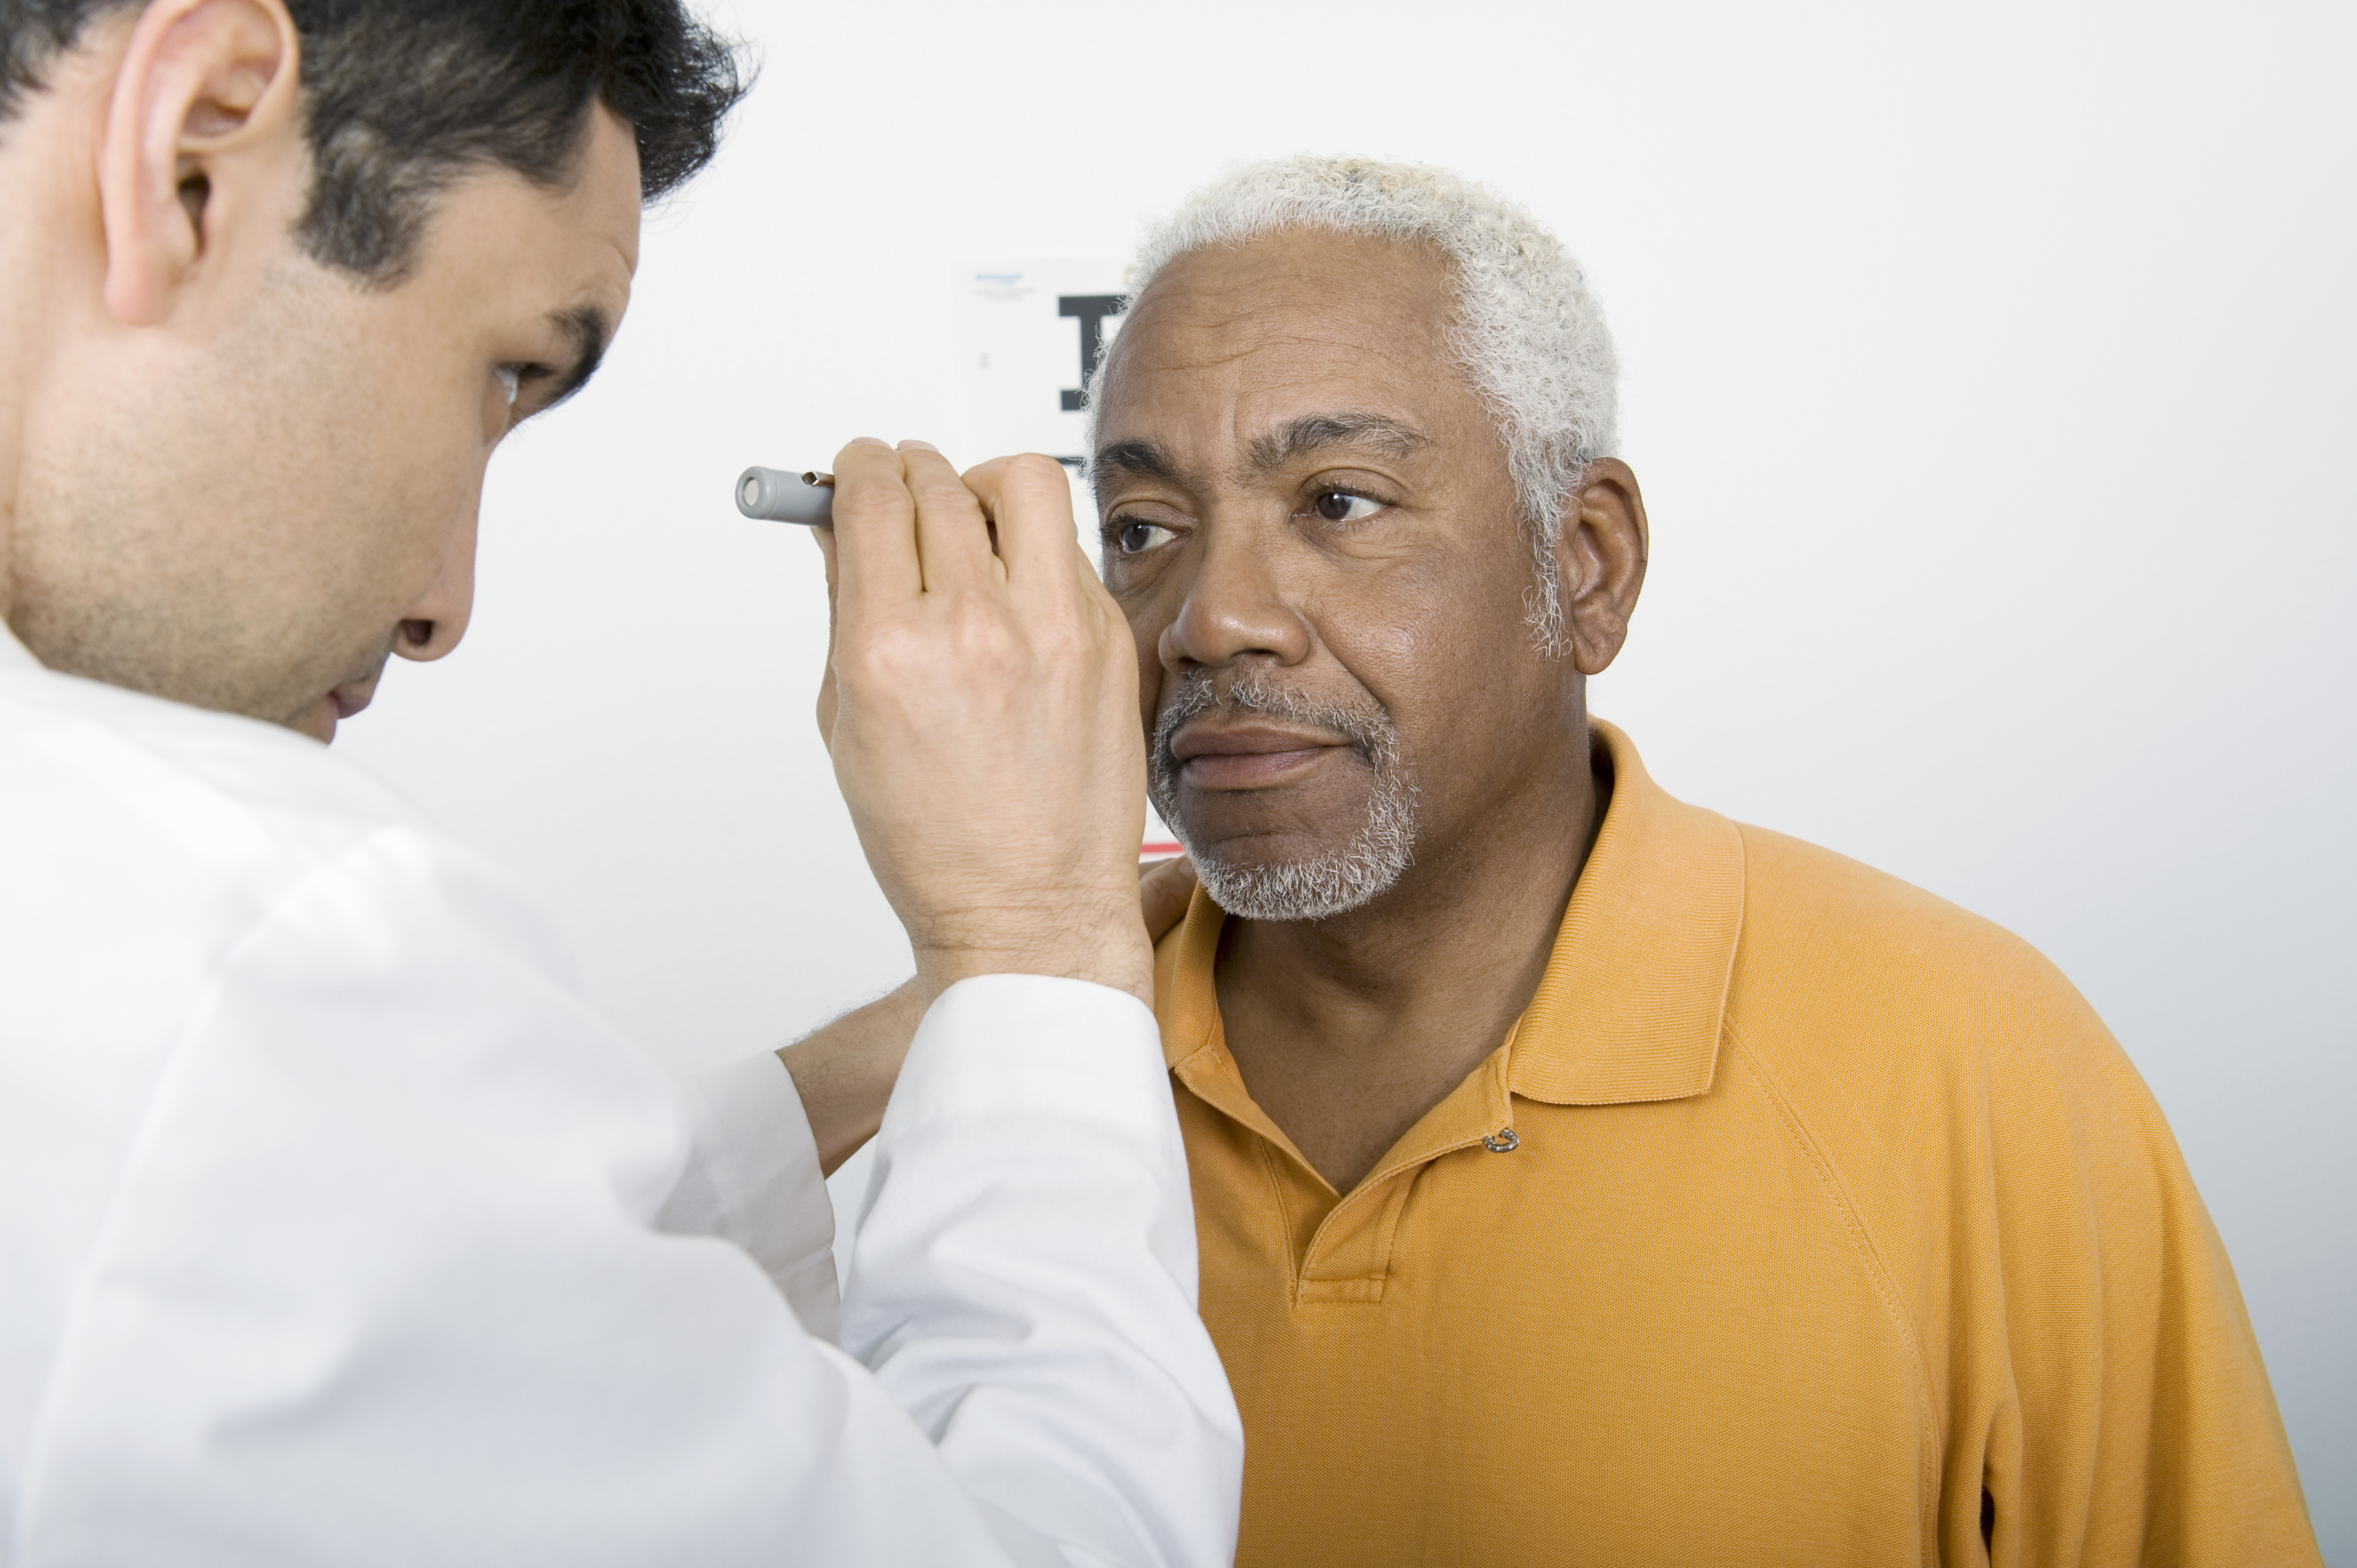 Older African American man having his eyes checked